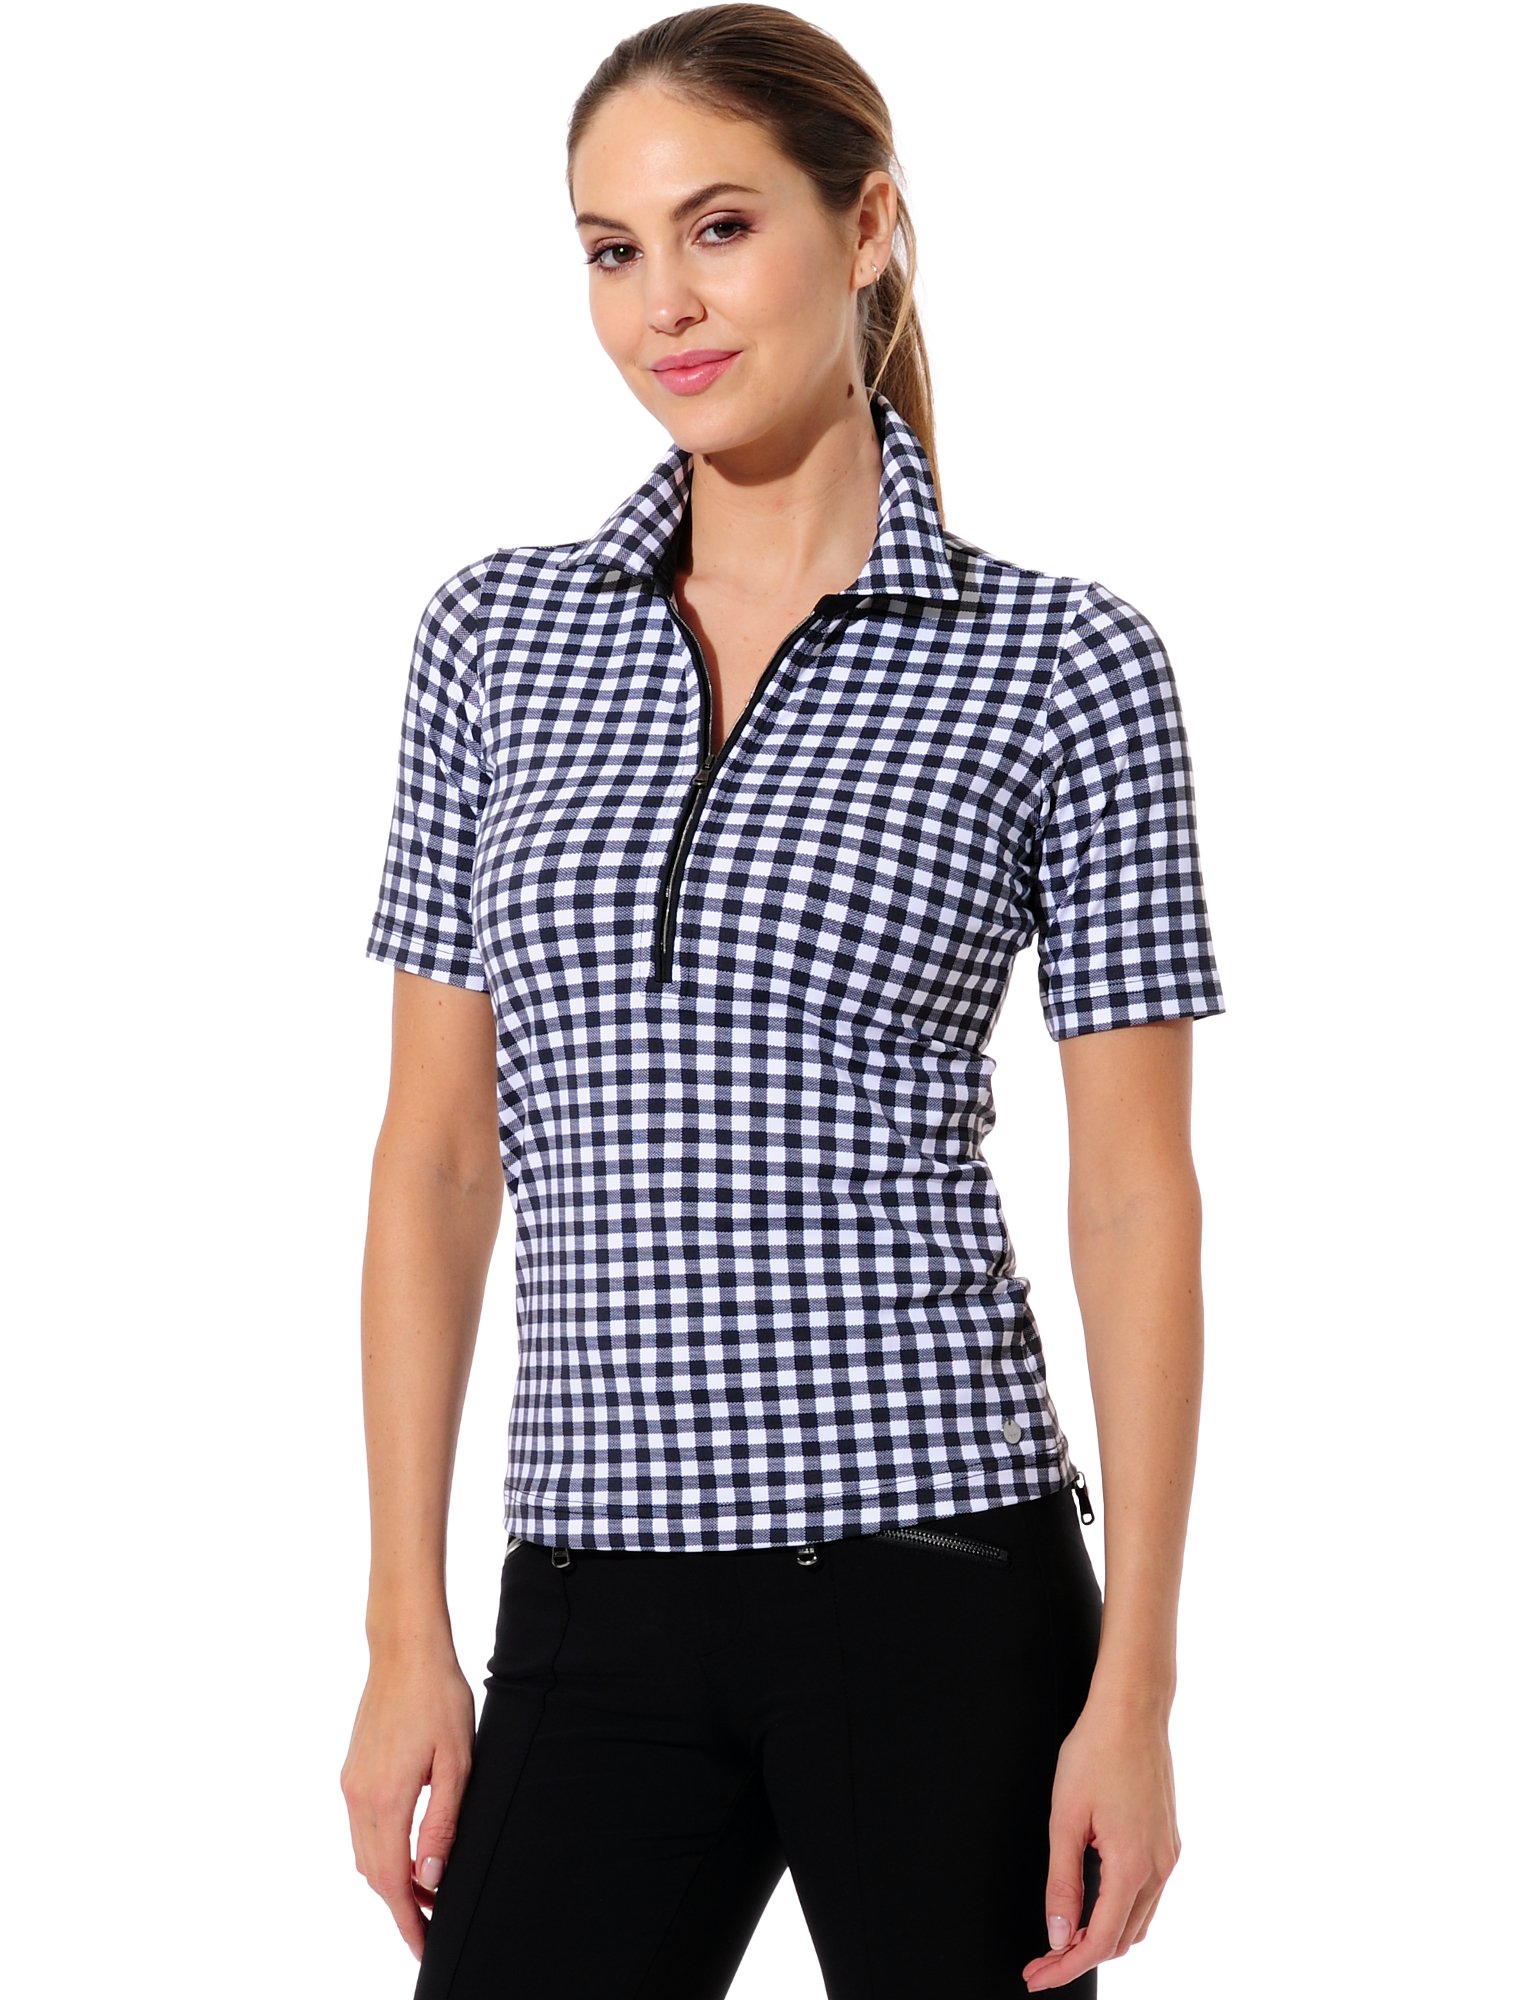 Squares print zip golf polo shirt black/white 